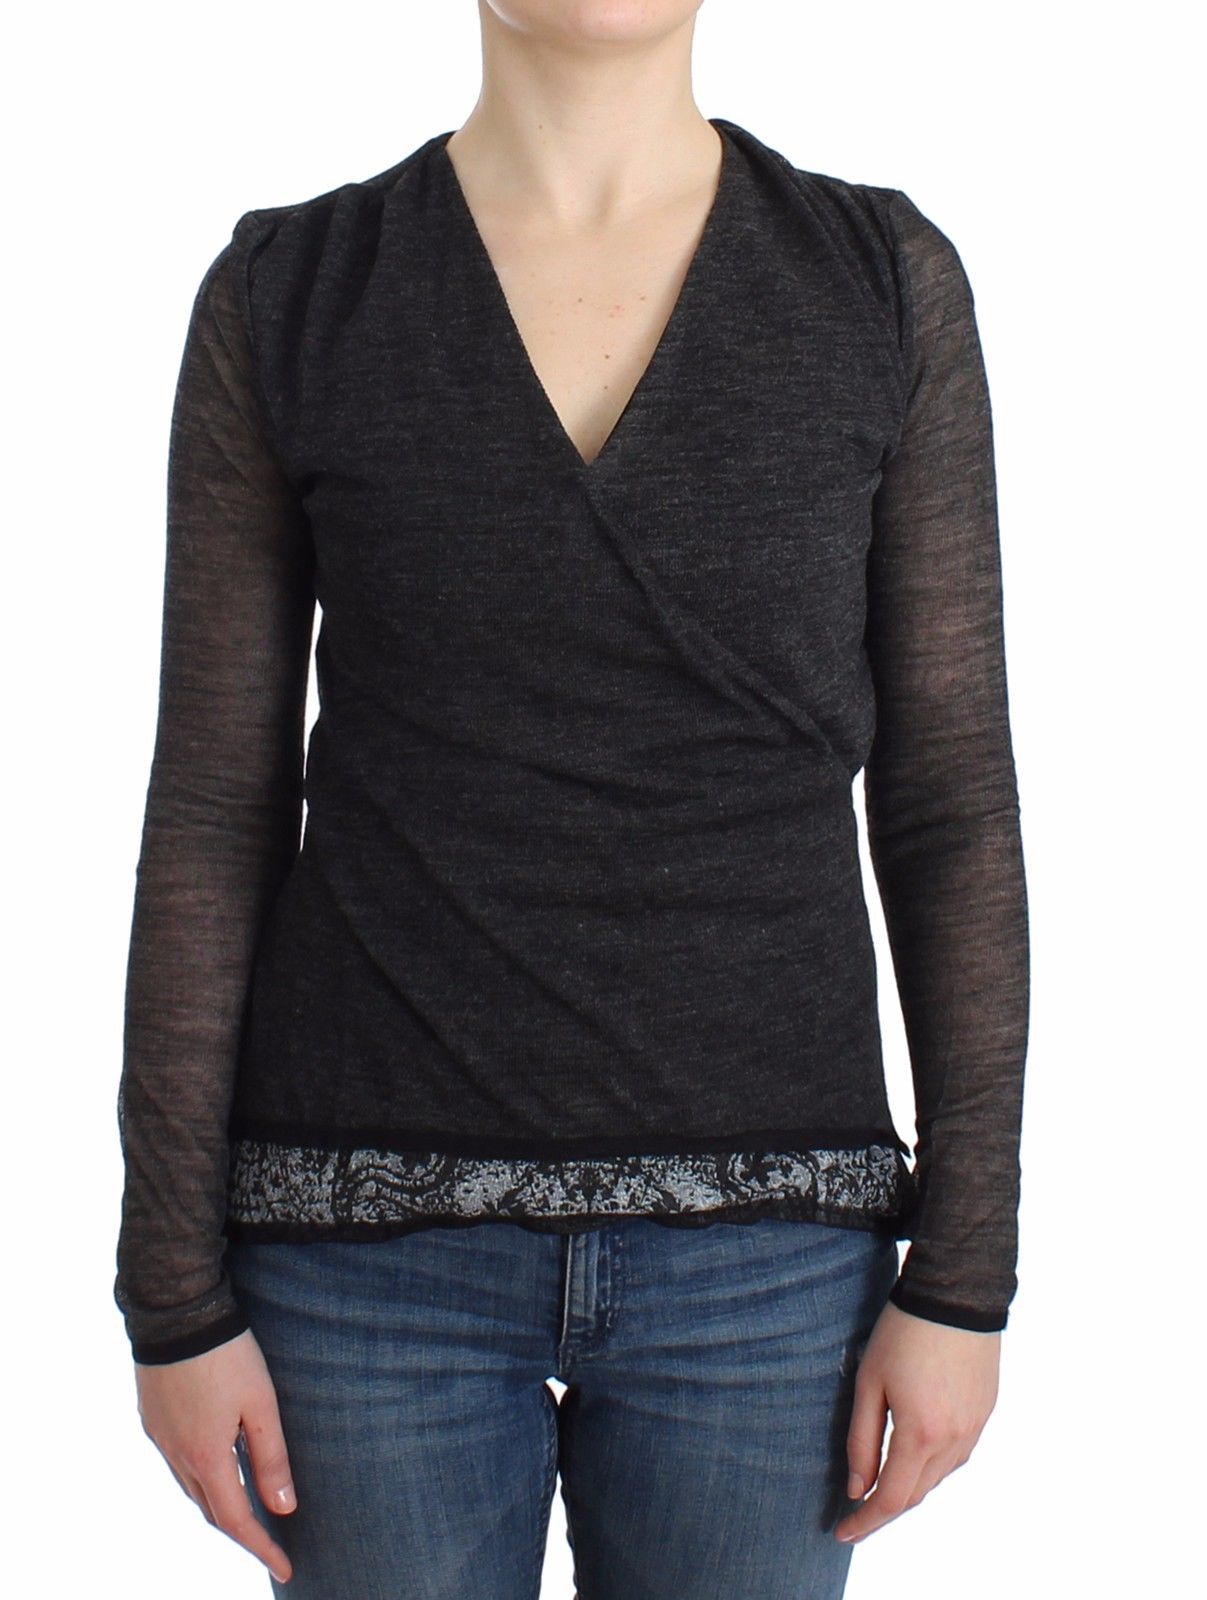 Gray Wool Blend Stretch Long Sleeve Sweater